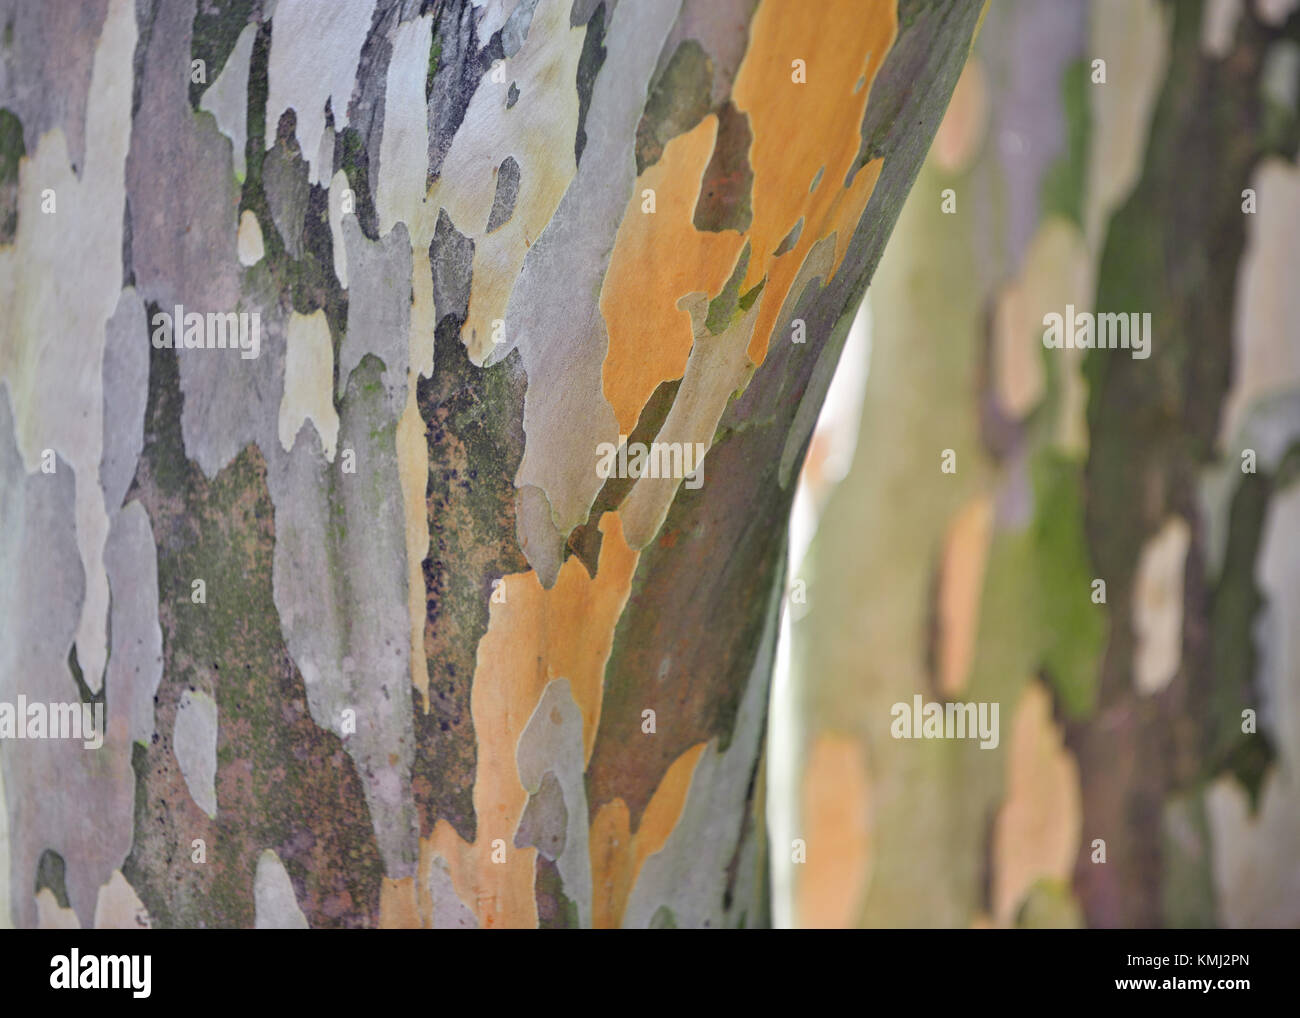 Japanese Stewartia, bark texture and pattern Stock Photo